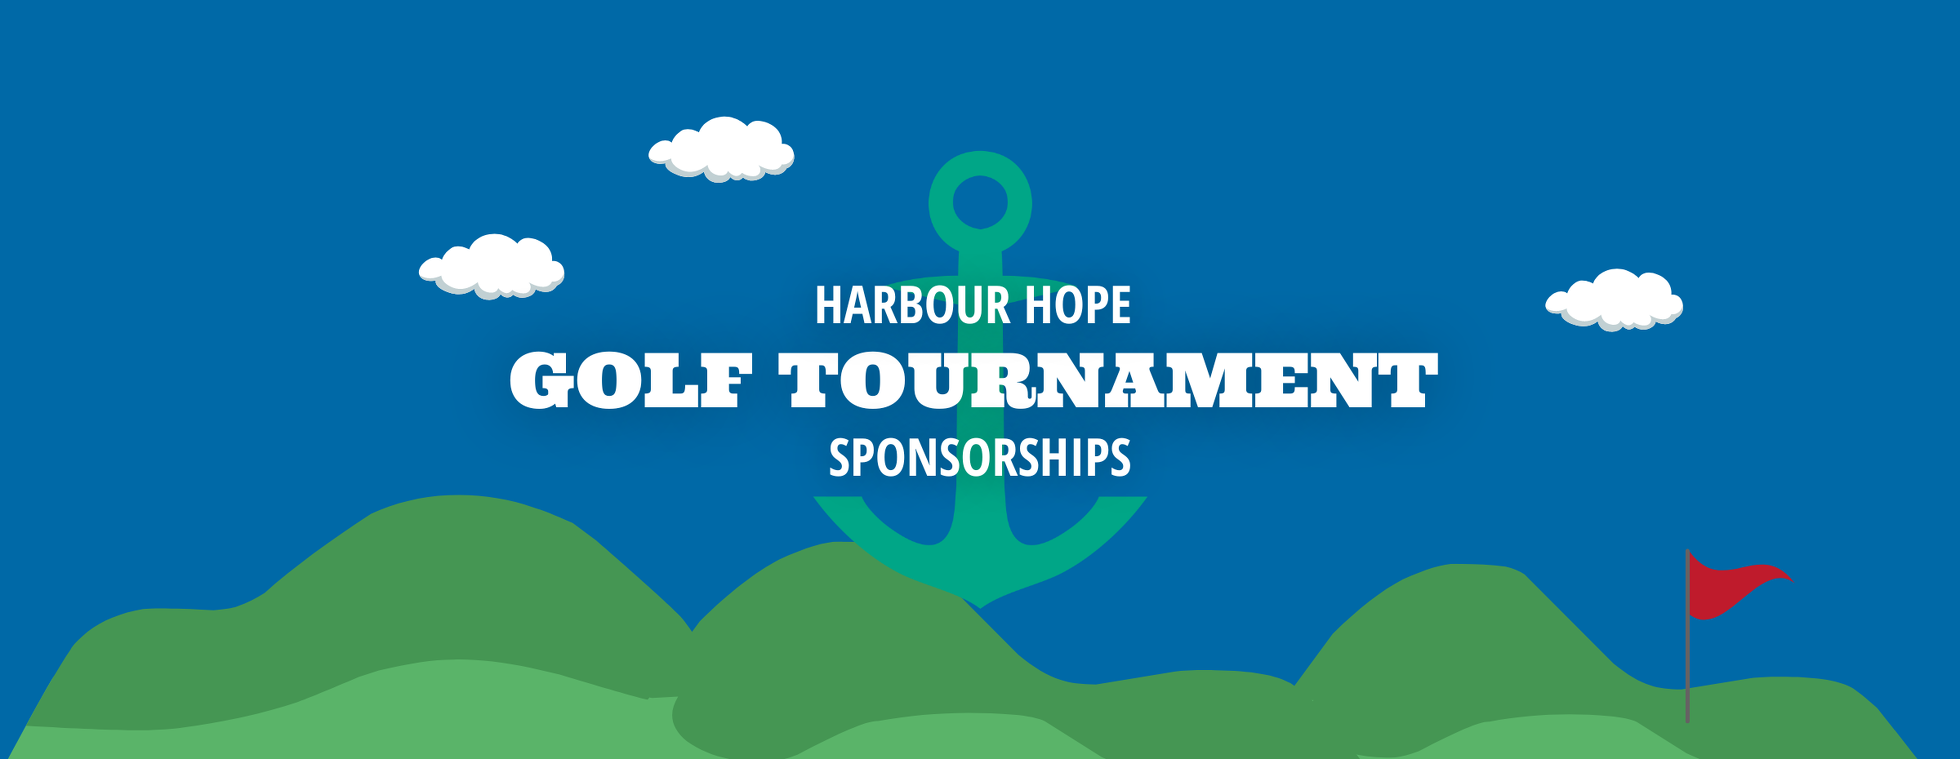 3rd Annual Golf Tournament Sponsorships